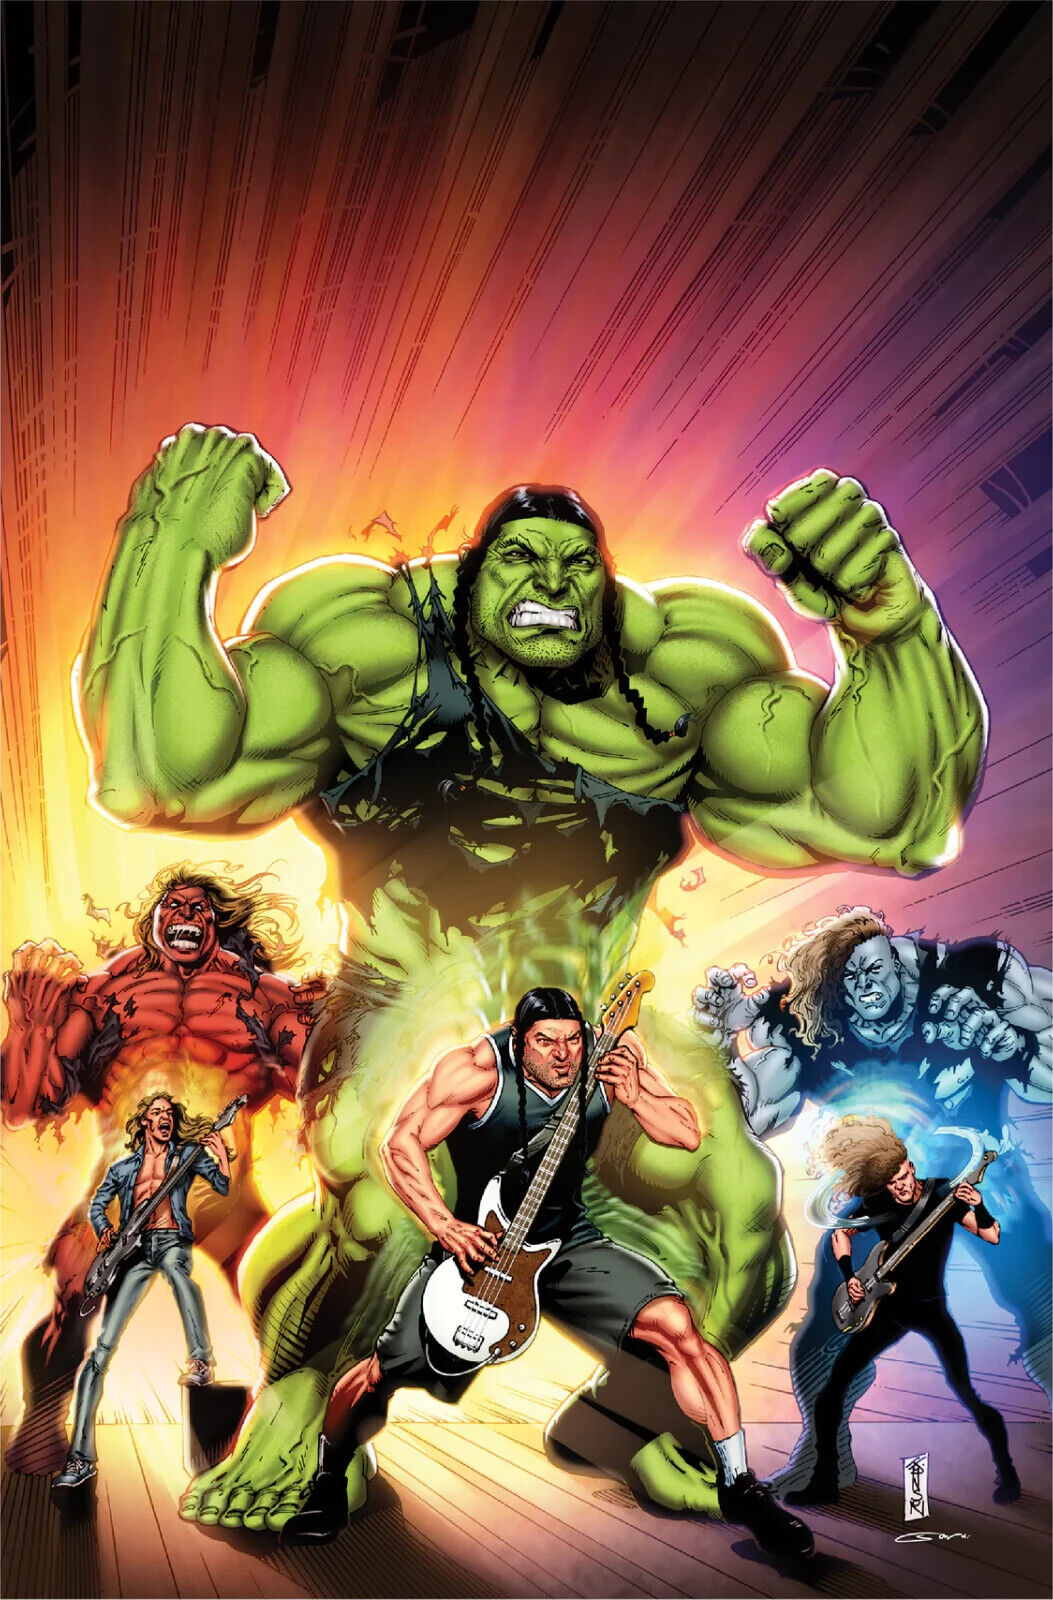 Orbit: Metallica #1 Jason Johnson Hulk #393 C2E2 Variant Cover (B) LTD